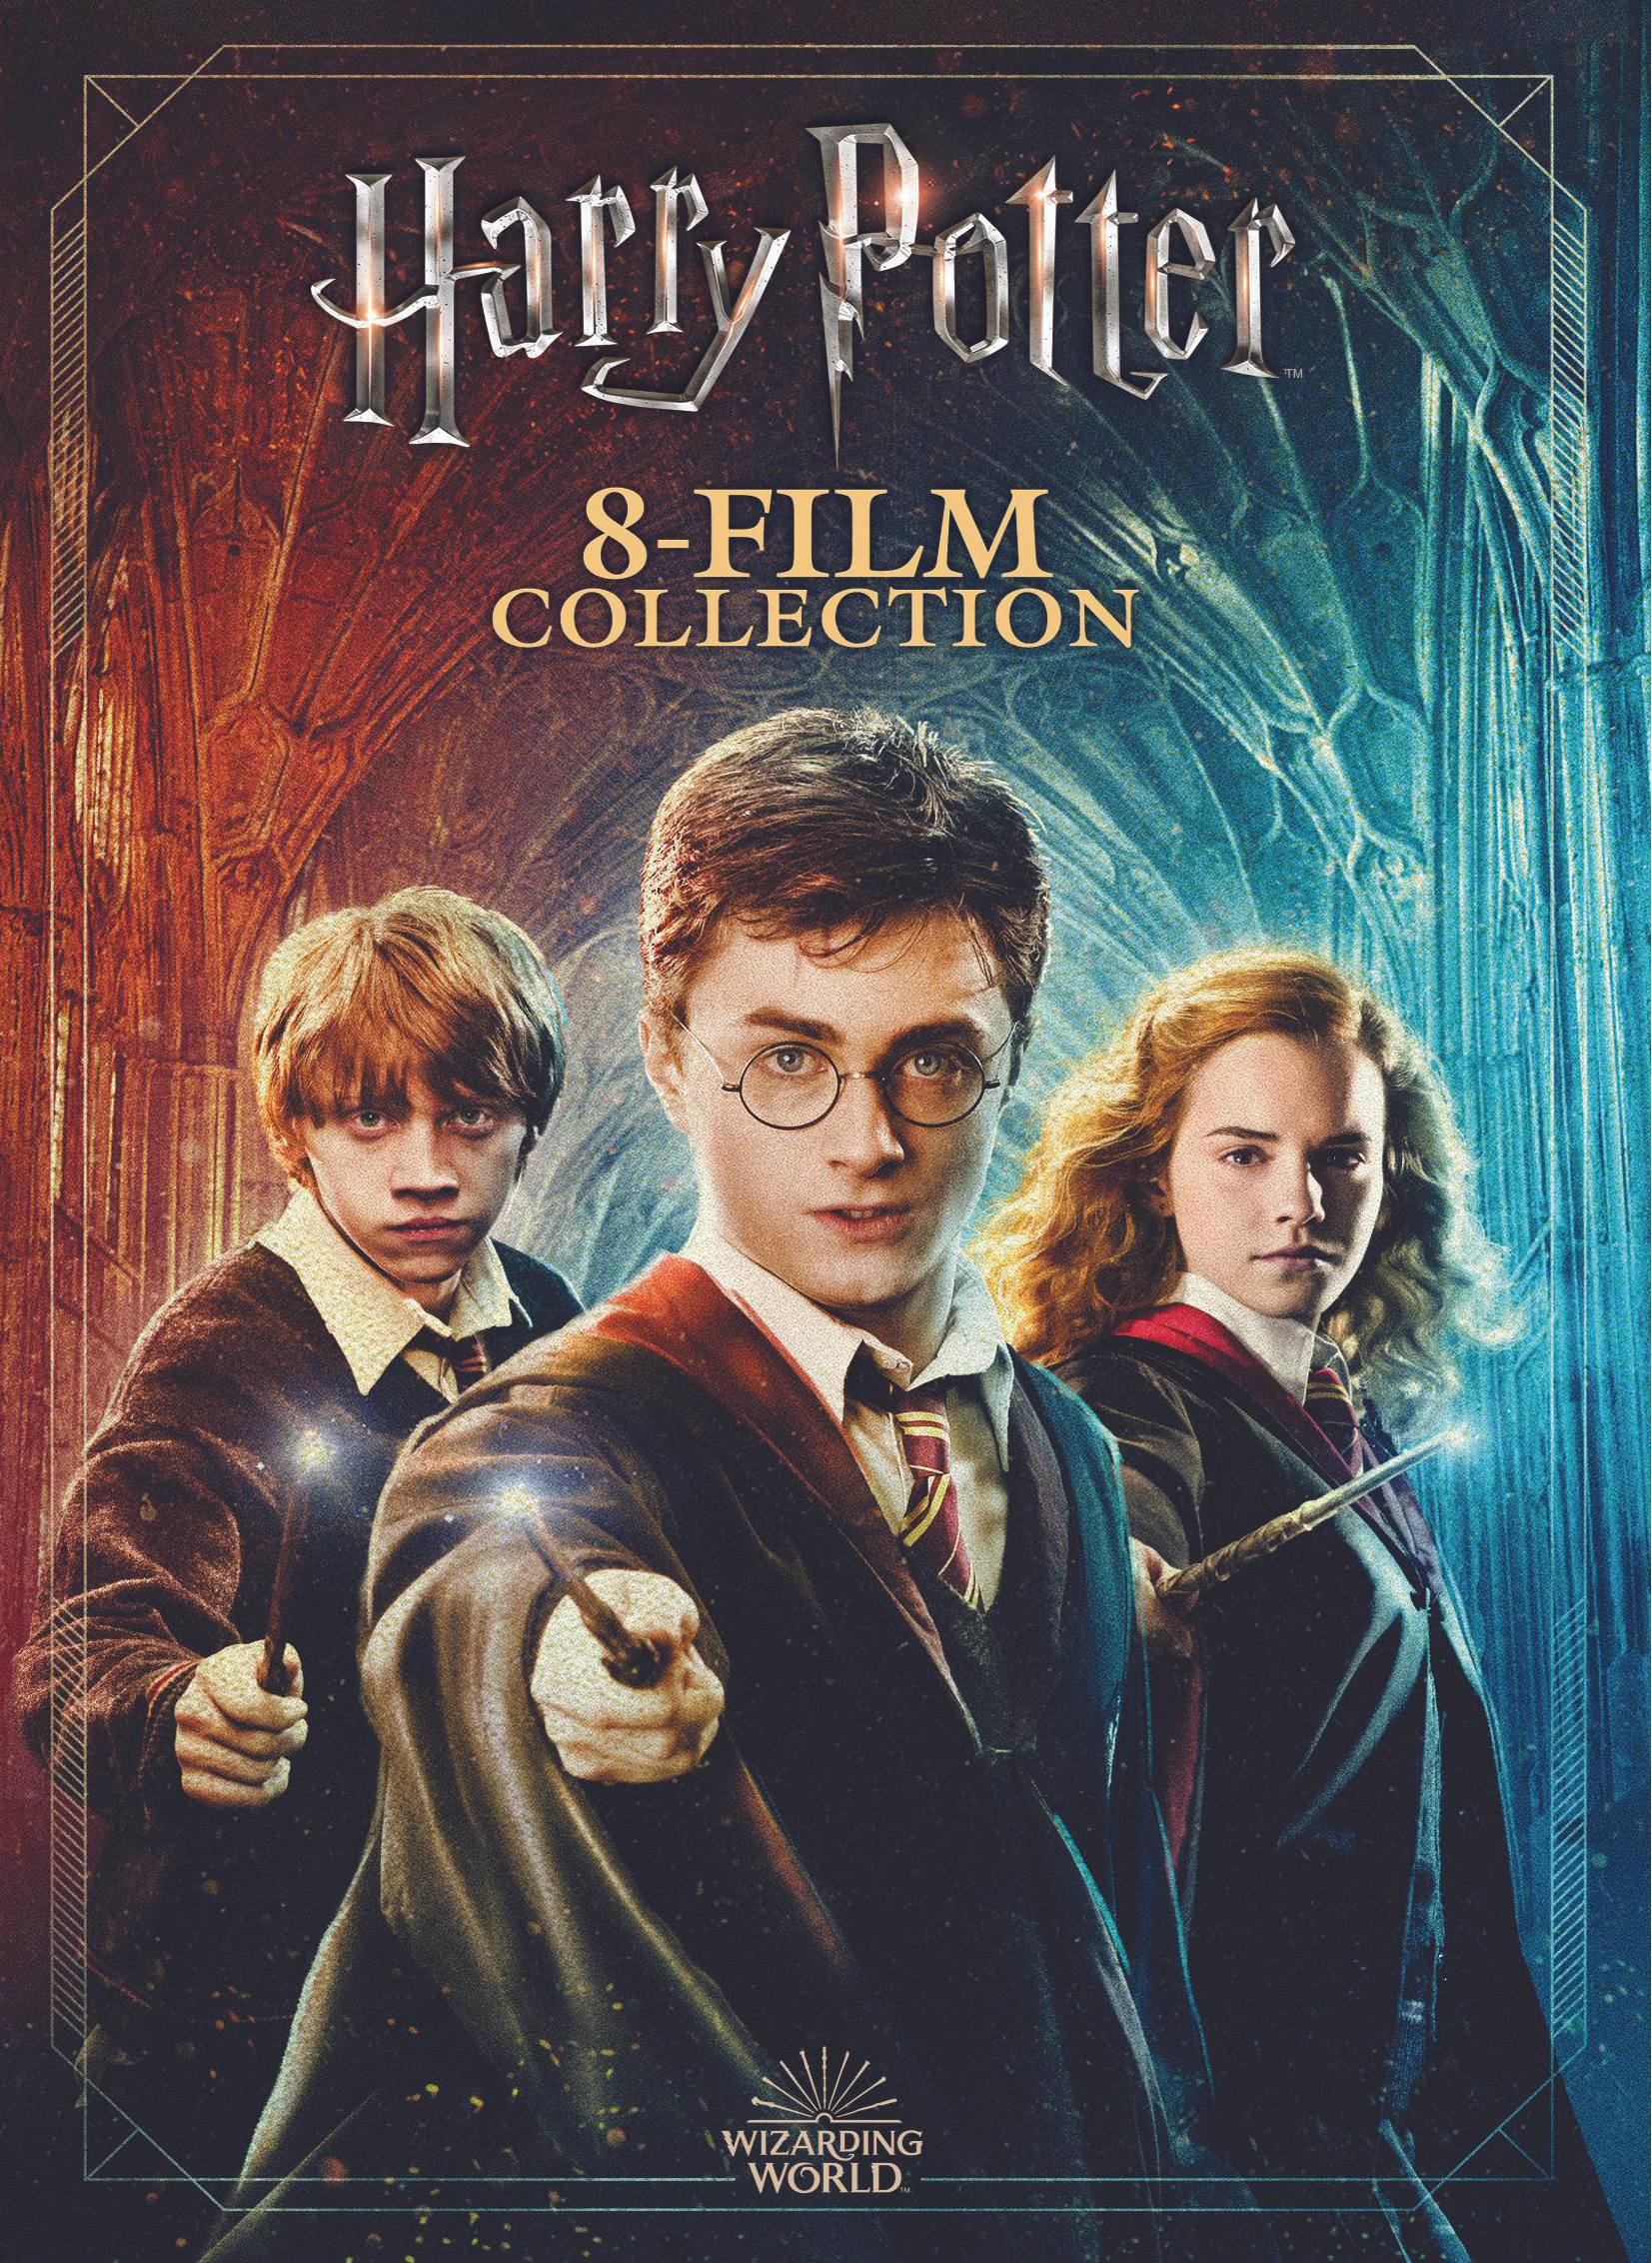 Politiebureau Chemie Schrijf een brief Harry Potter 8-Film Collection [20th Anniversary Edition] [DVD] - Best Buy